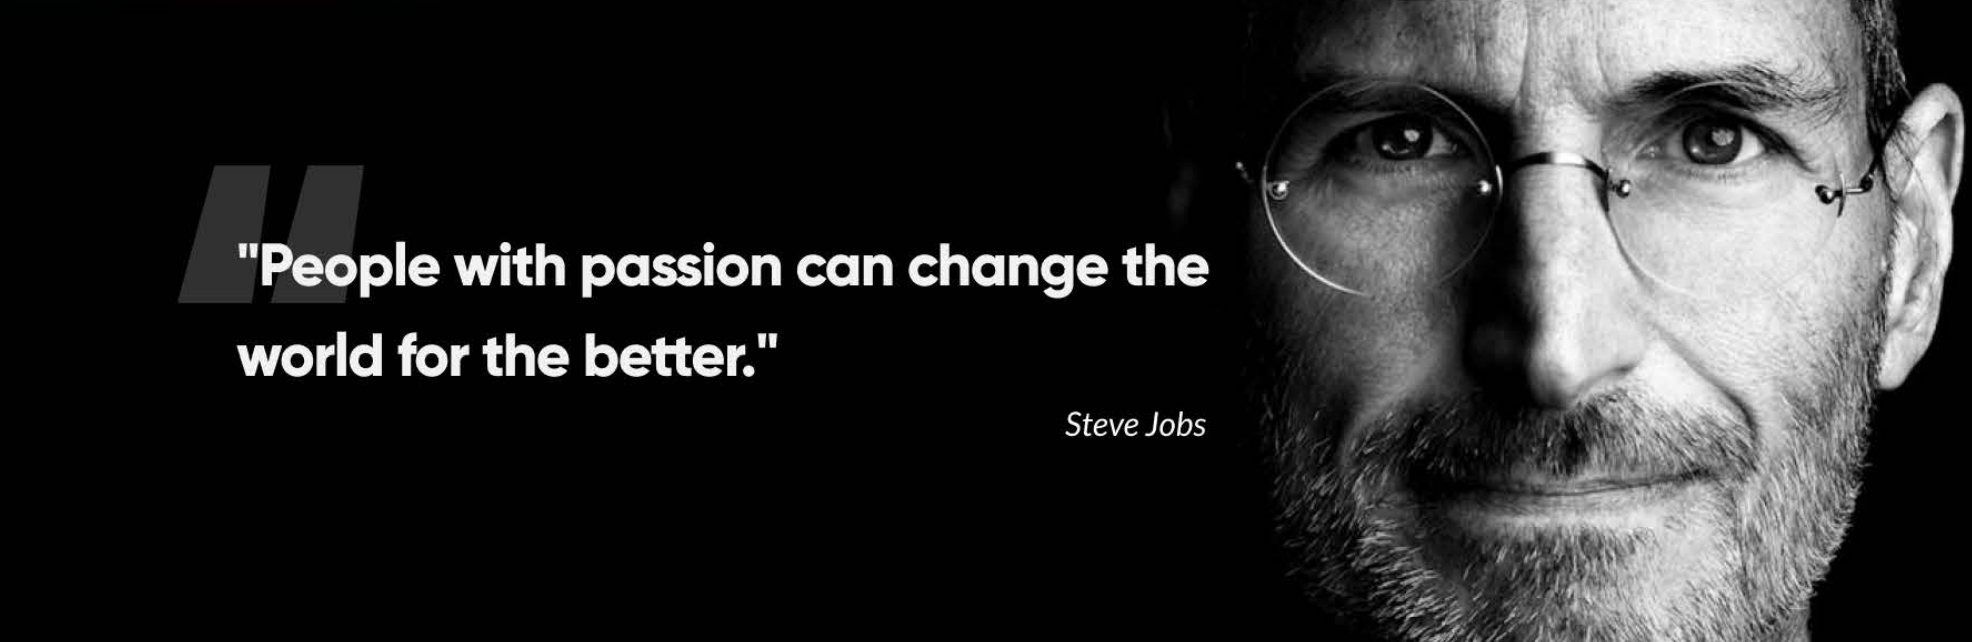 UX Design Approach Adapt Financial Brand Digital Age Metaverse Steve Jobs quote